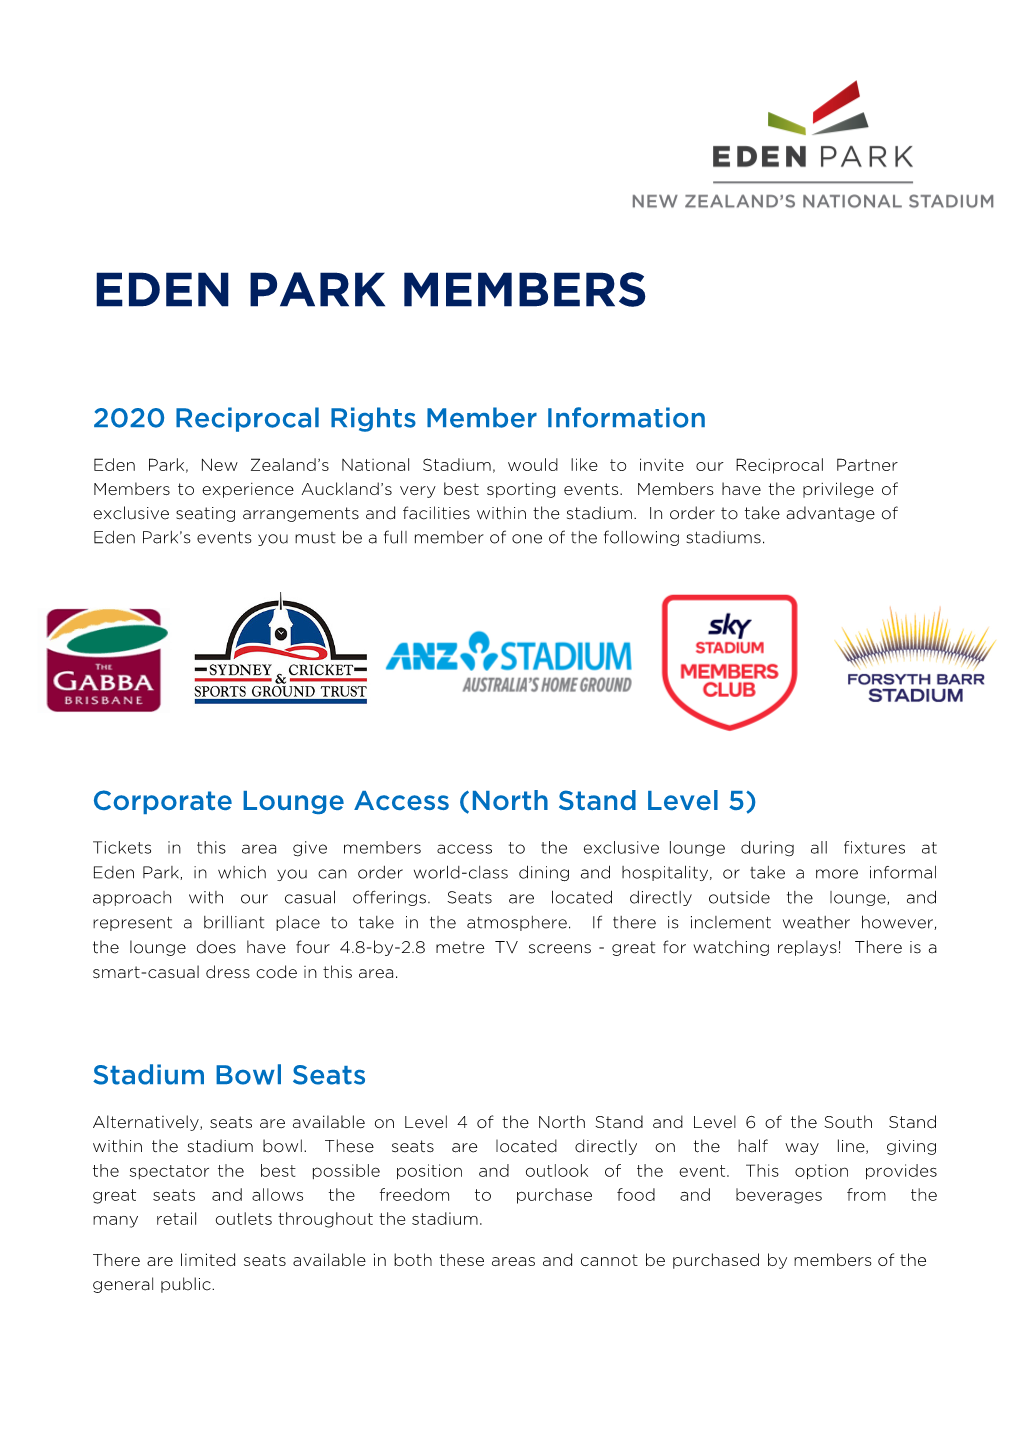 Eden Park Members